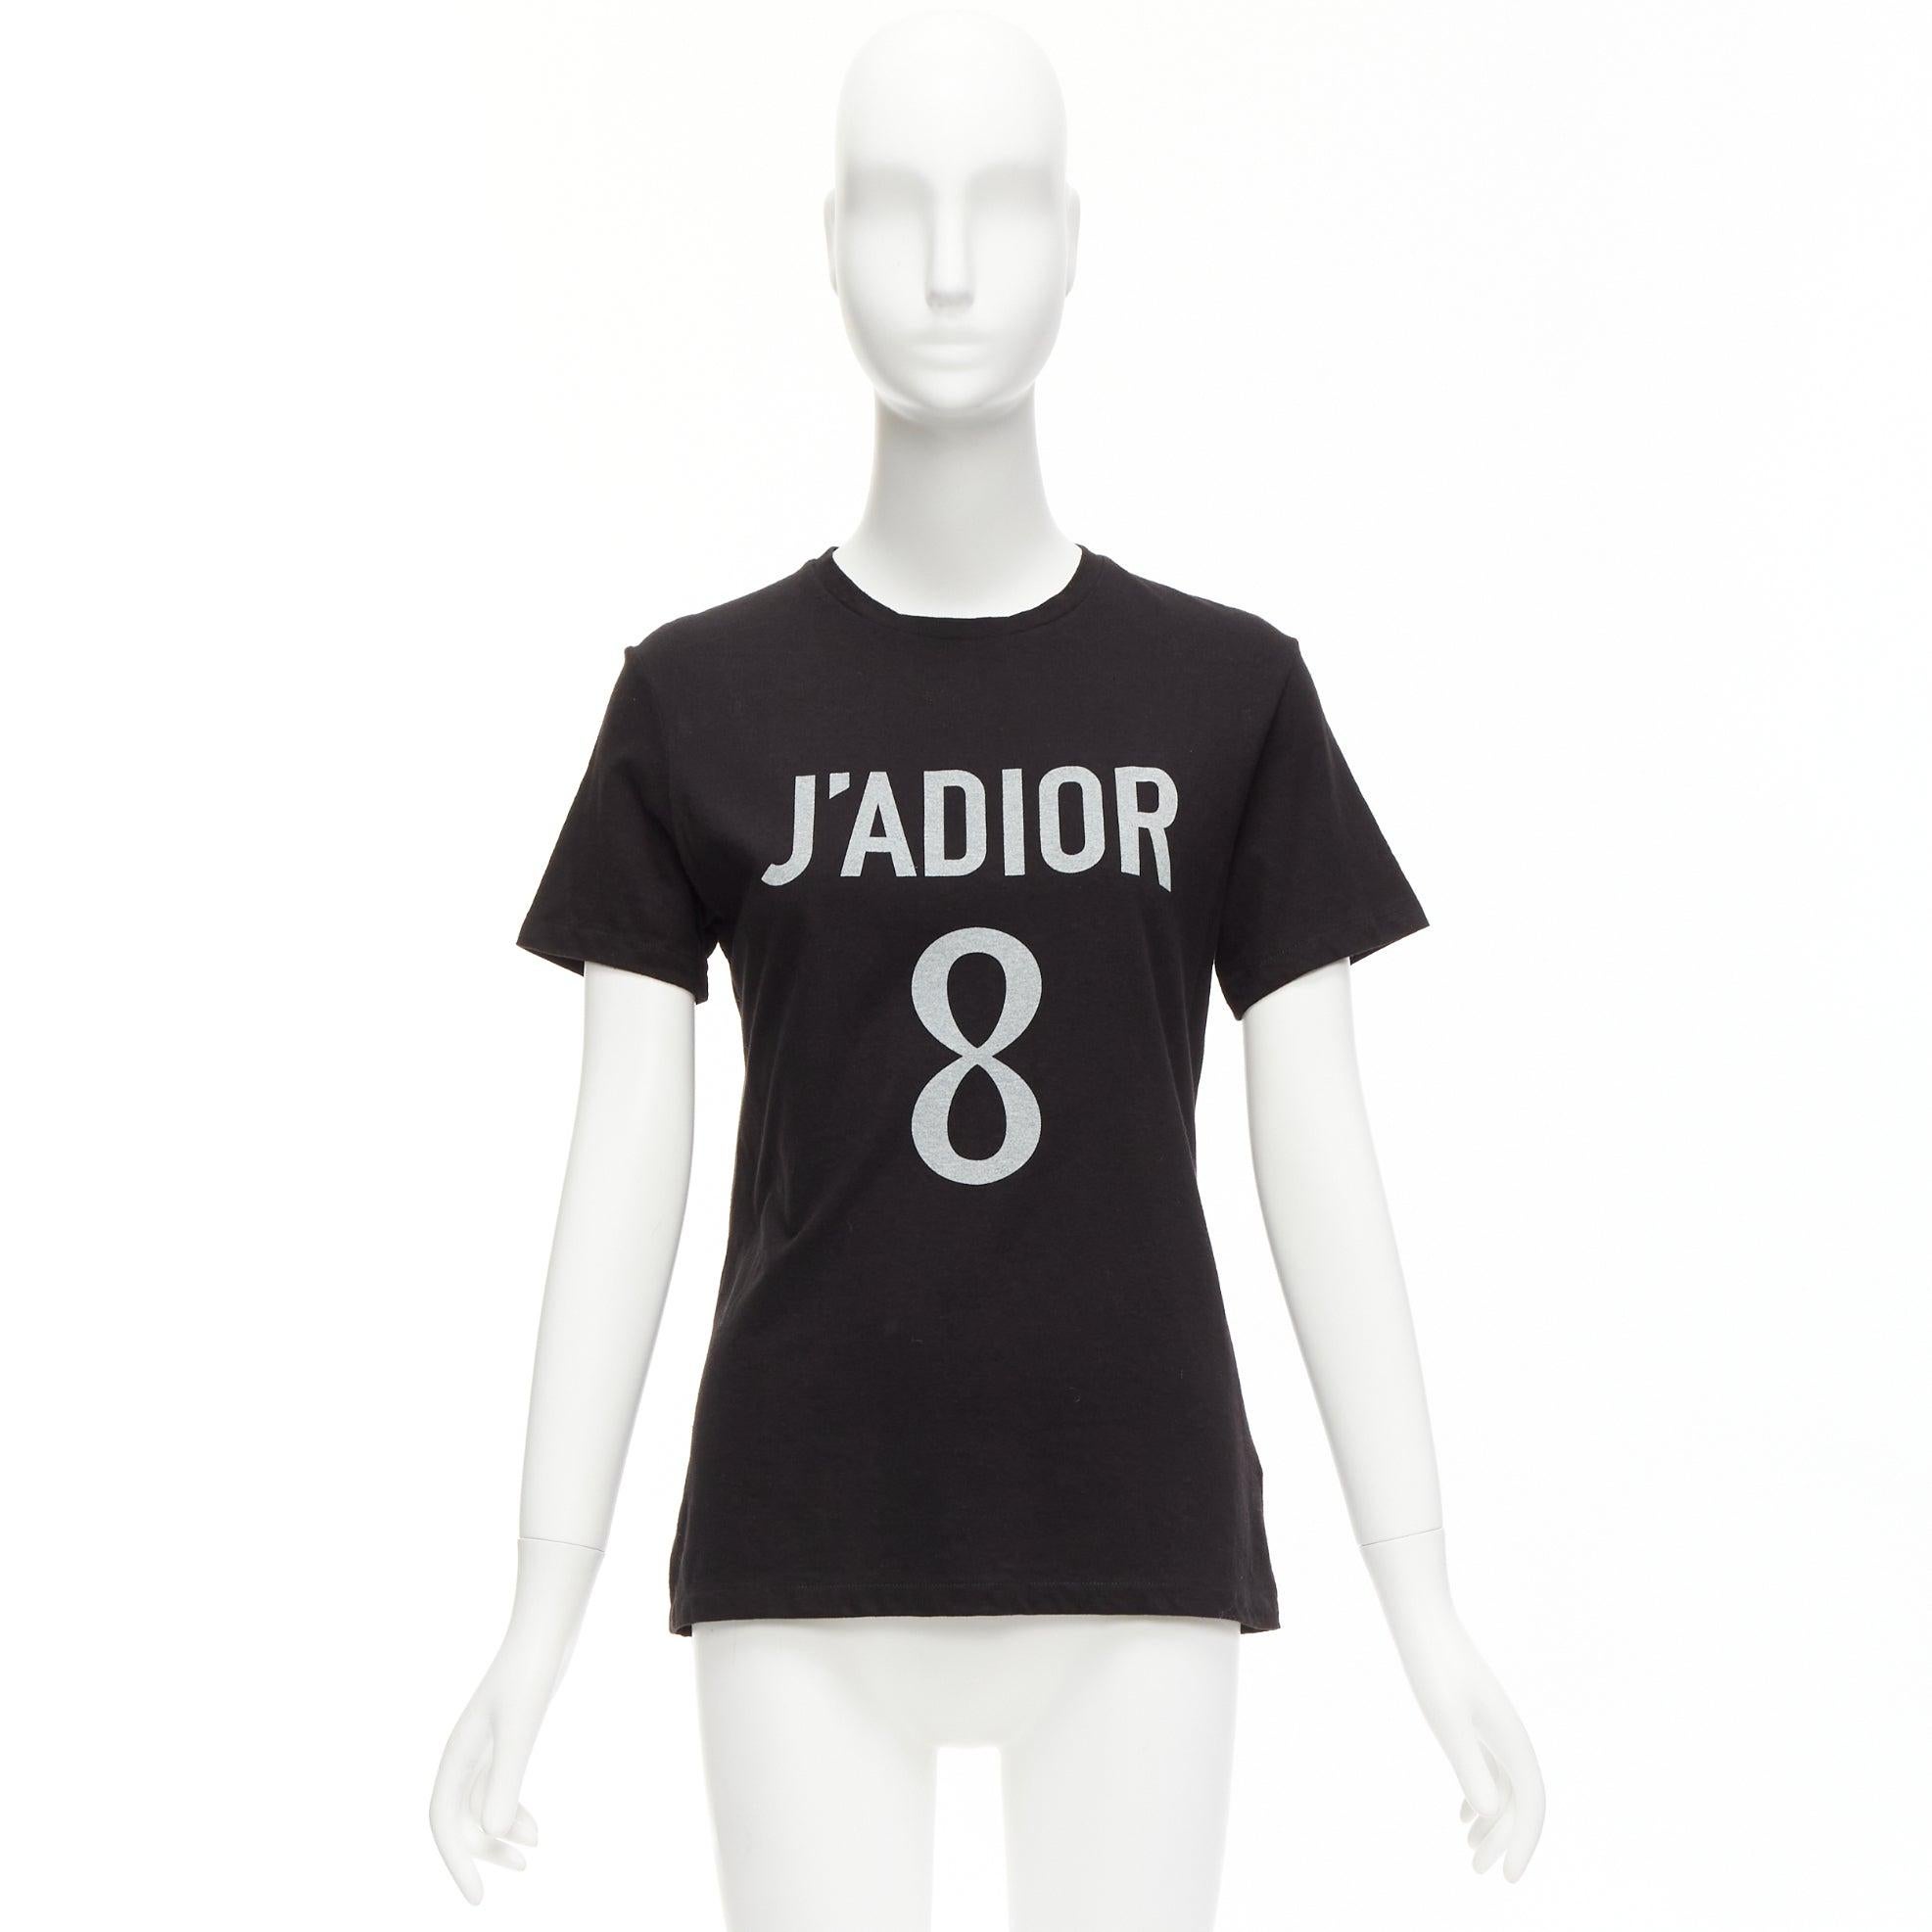 DIOR J'adior 8 black logo distressed screen print fitted tshirt XS For Sale 5